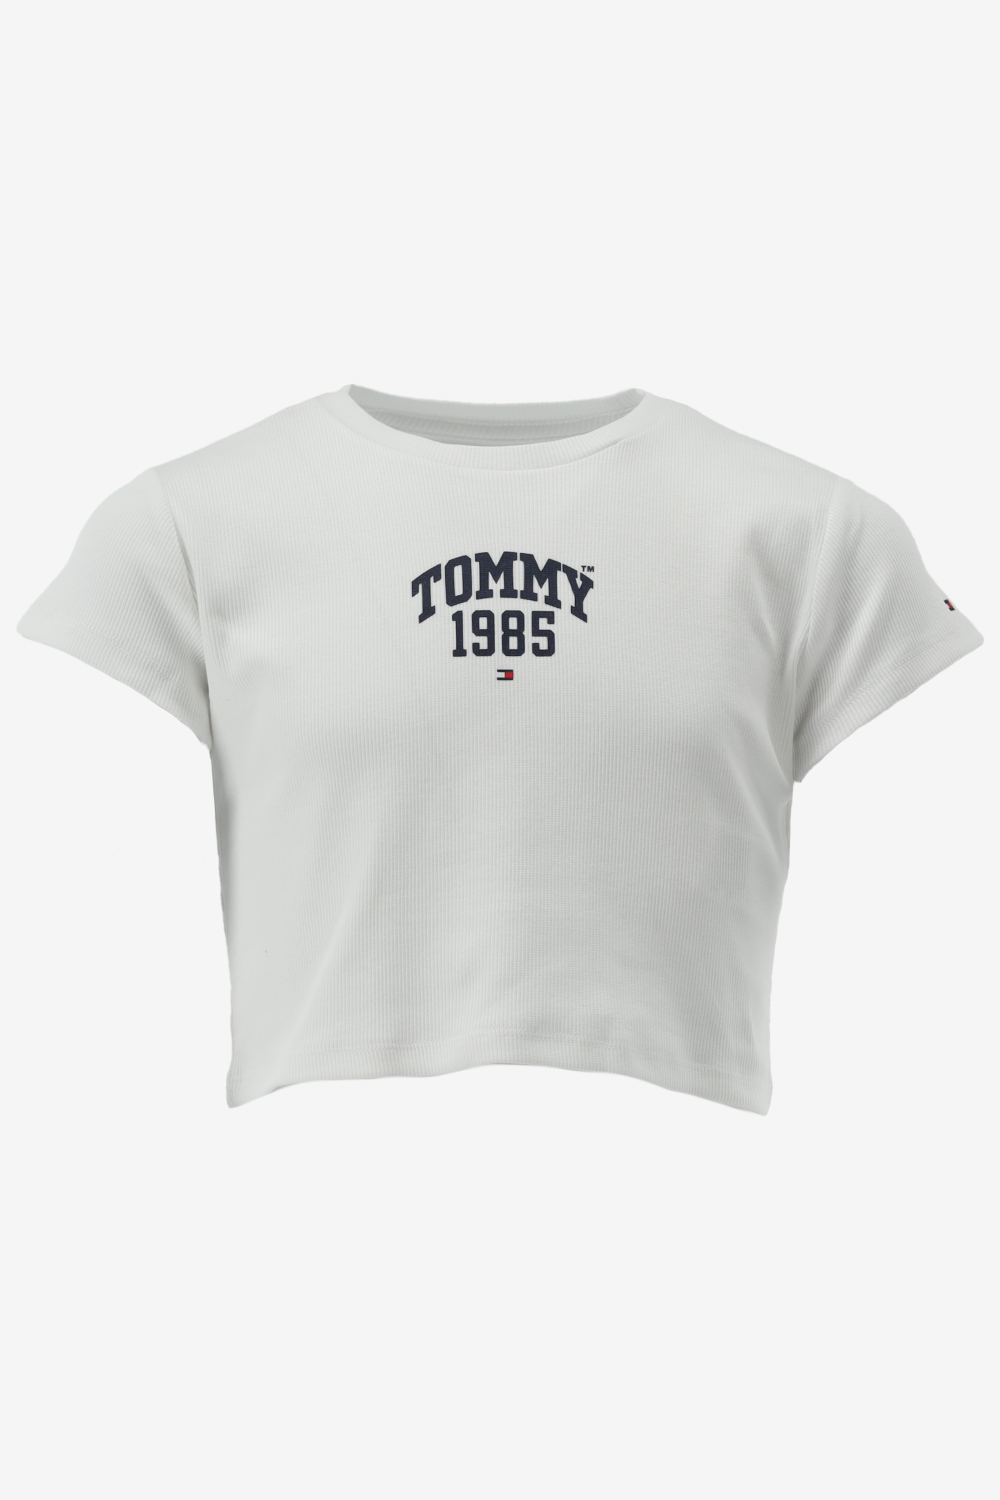 Tommy hilfiger t-shirt maat 152/12J